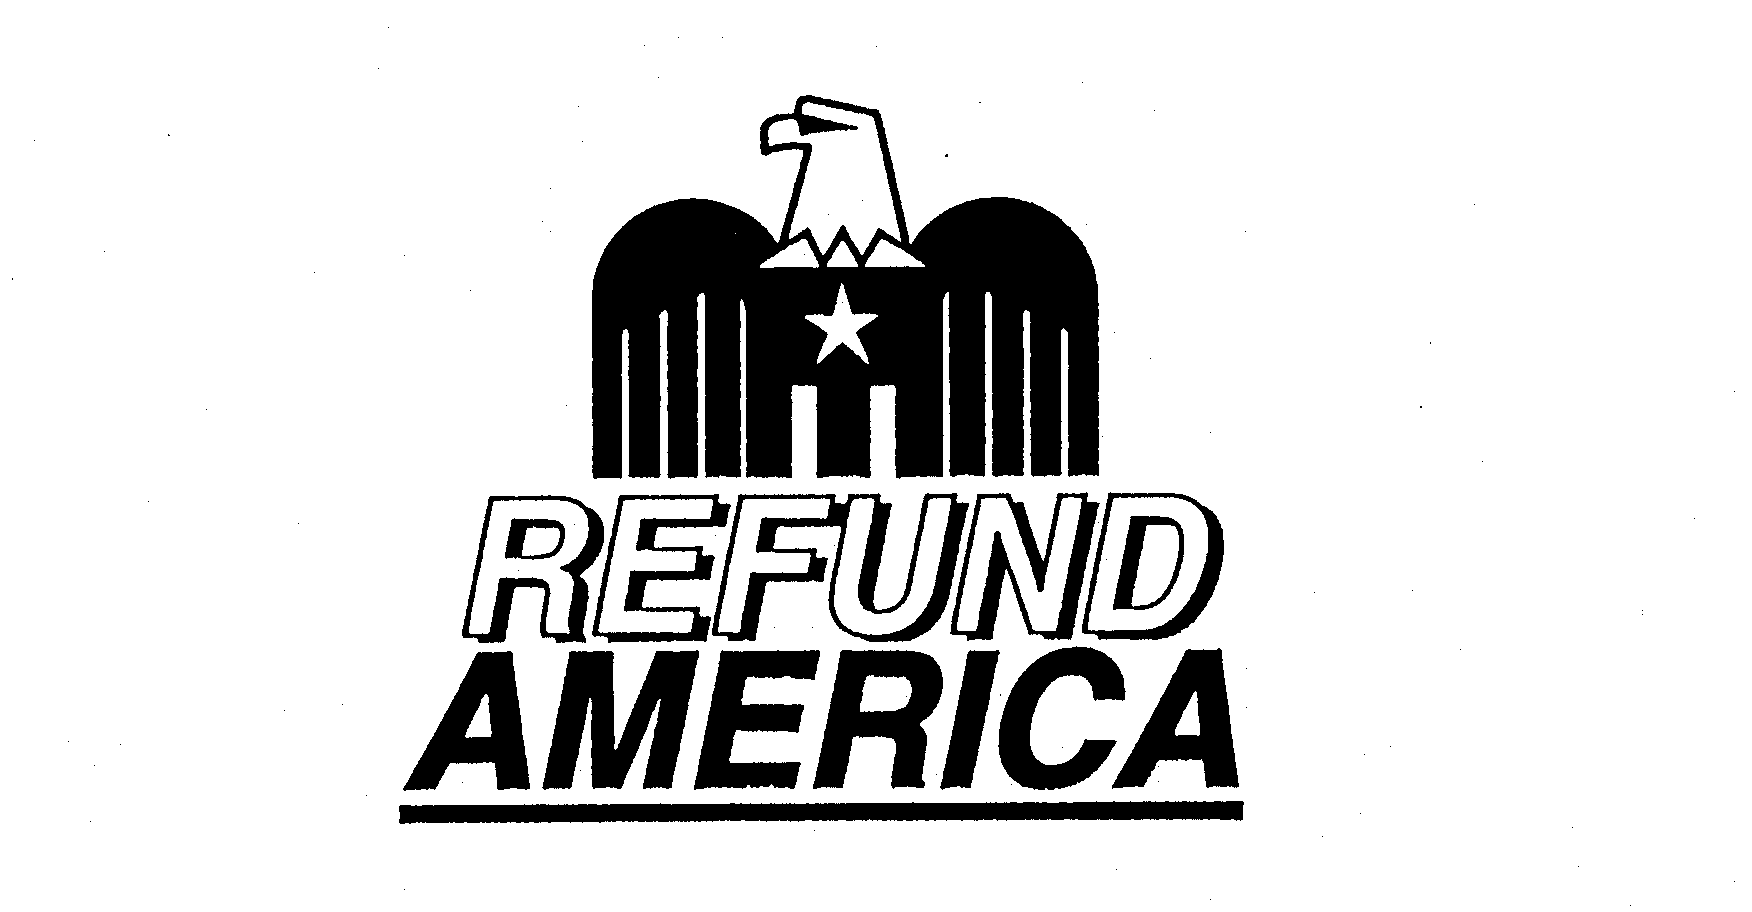 REFUND AMERICA